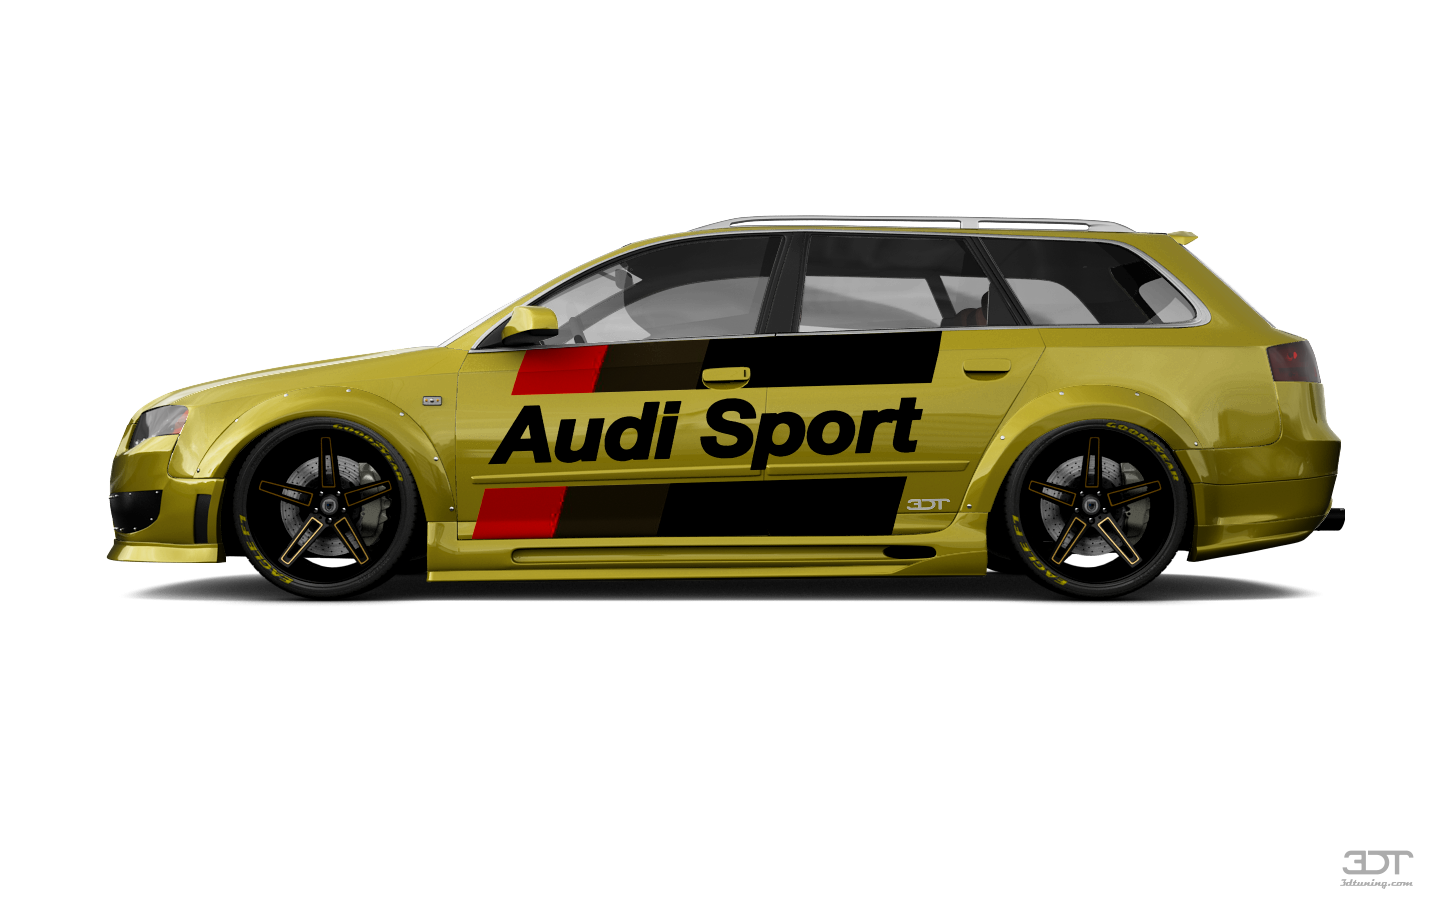 Audi A4 Avant 2006 tuning